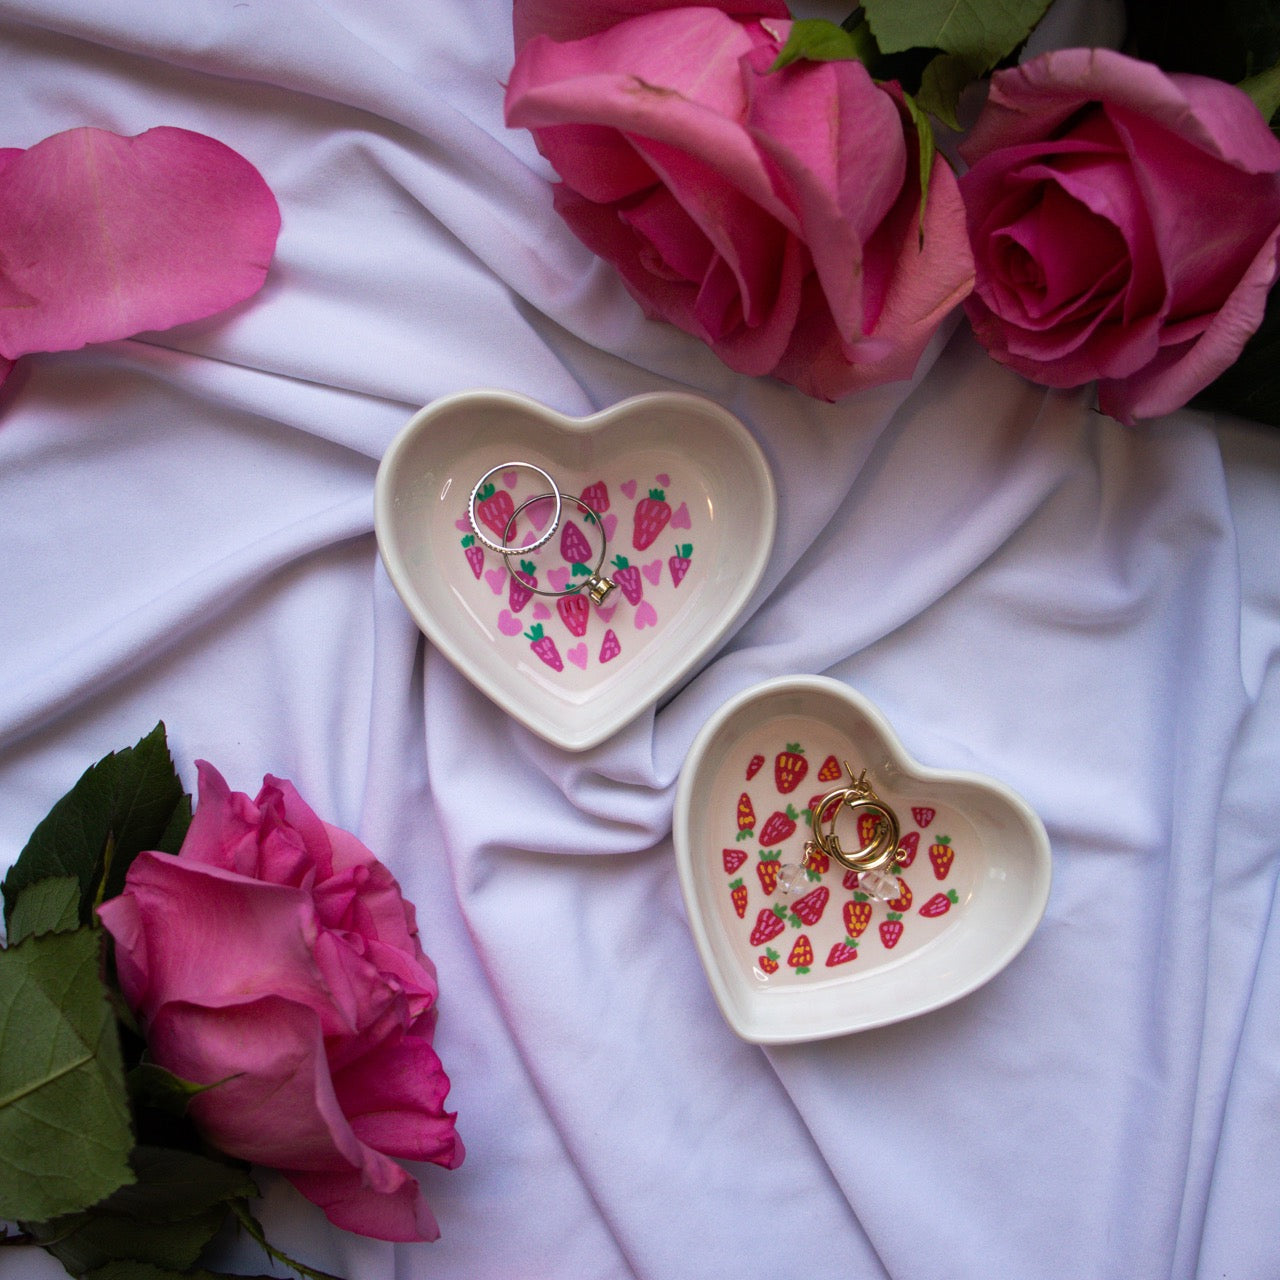 Strawberries and Hearts Pattern Ceramic Trinket Dish